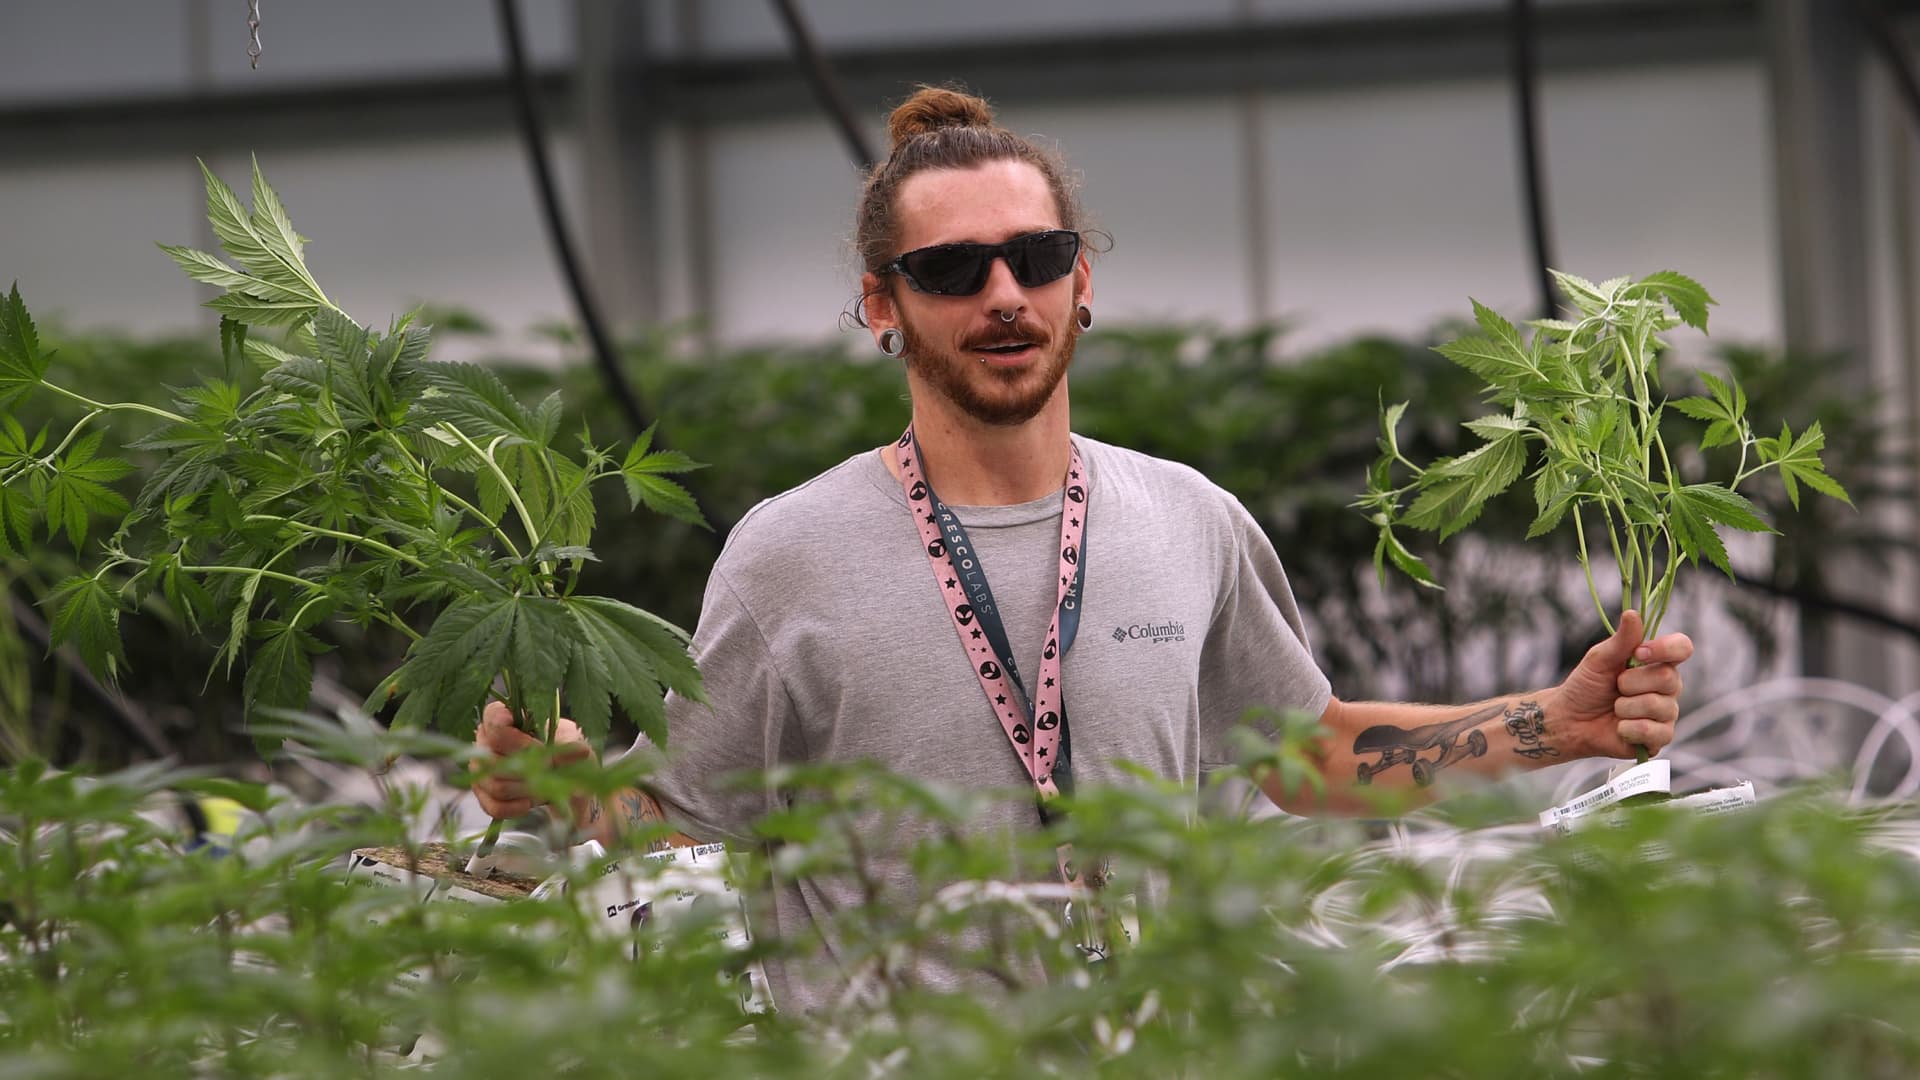 Jared Sadler harvests marijuana plants at a Cresco Labs cultivation facility in Indiantown, Florida.